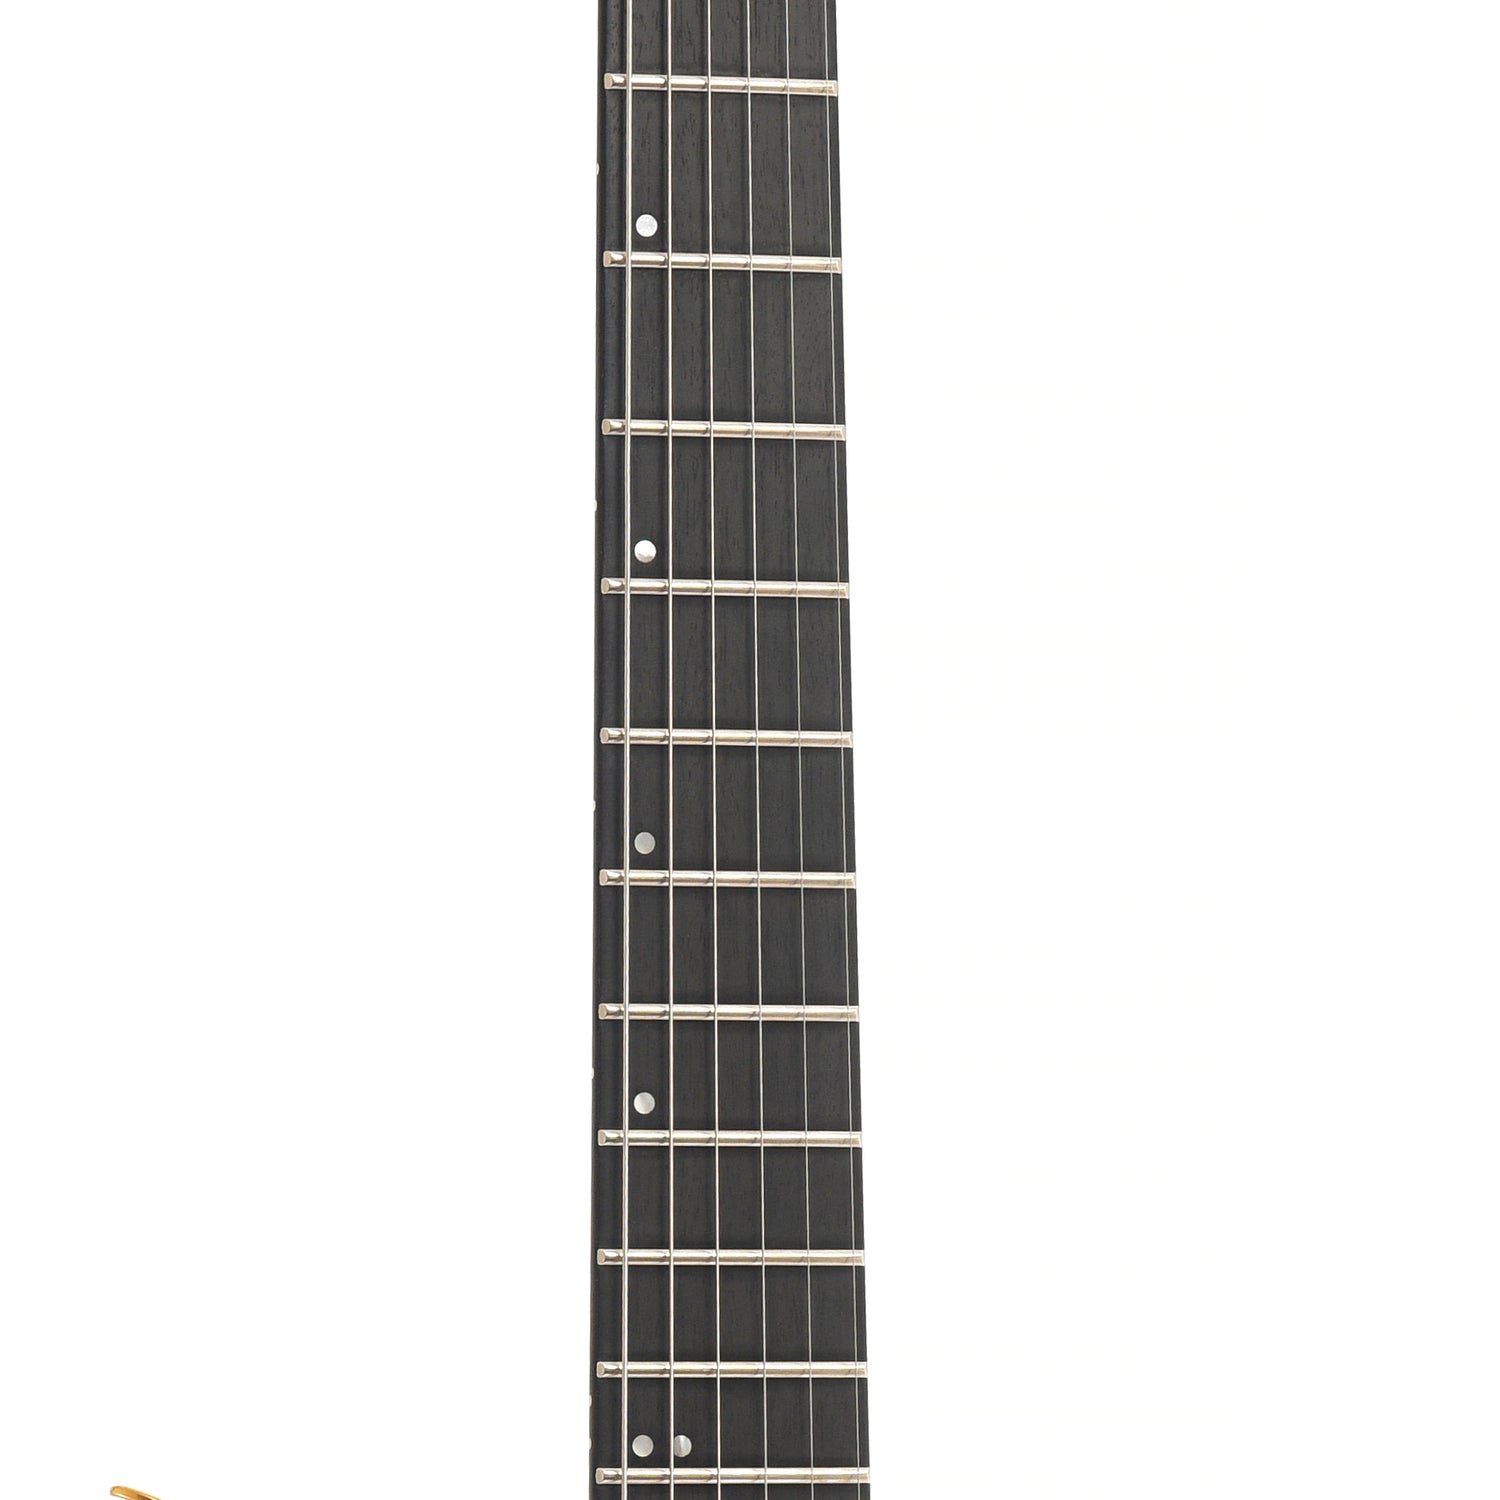 Fretboard of Ibanez Axe Design Lab Prestige Series RGA622XH Electric Guitar, Black